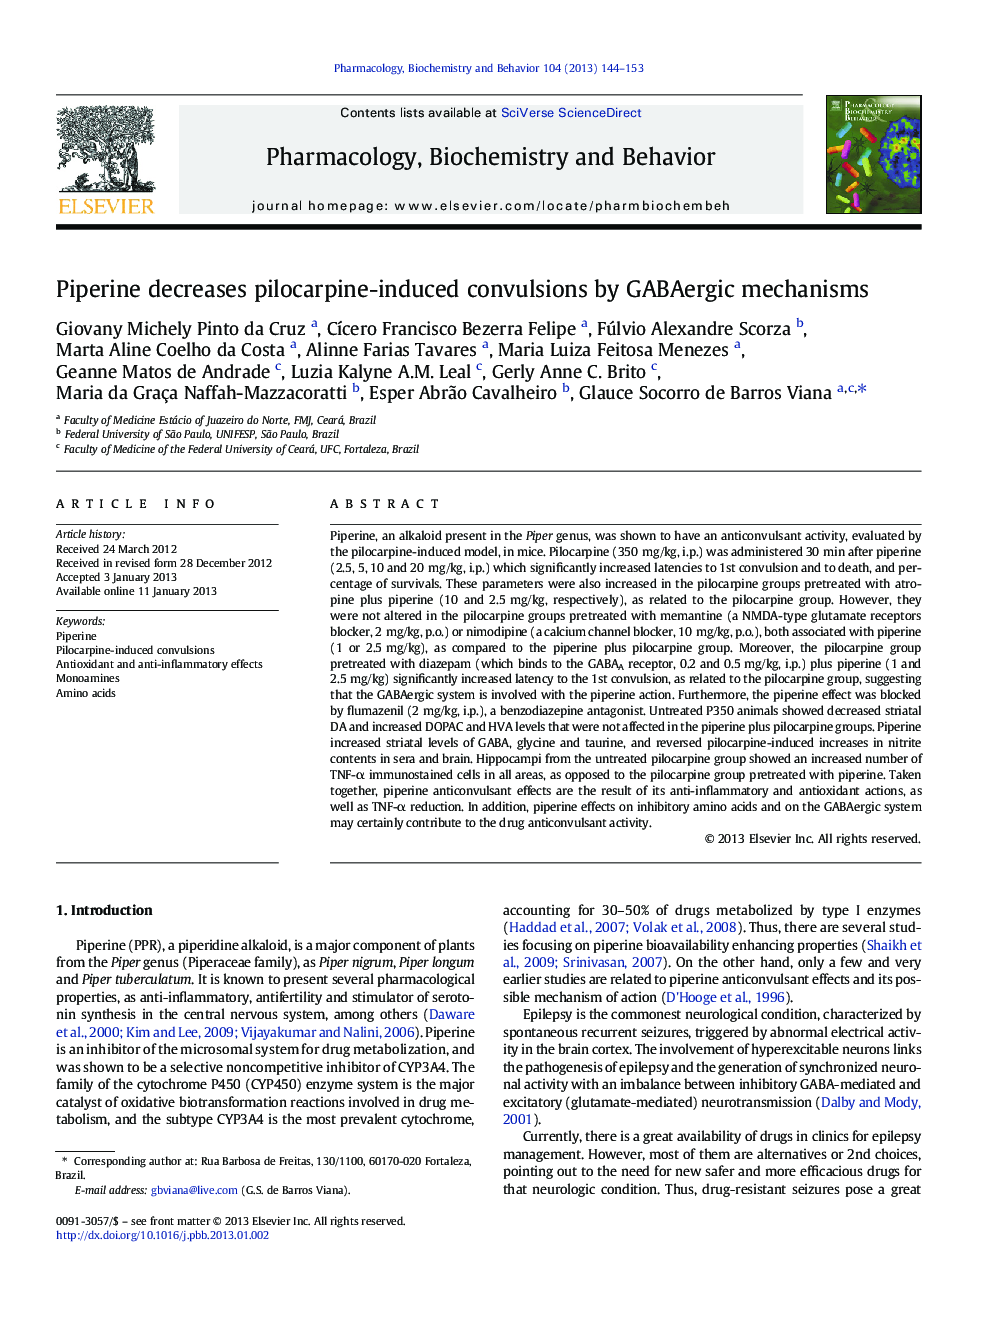 Piperine decreases pilocarpine-induced convulsions by GABAergic mechanisms